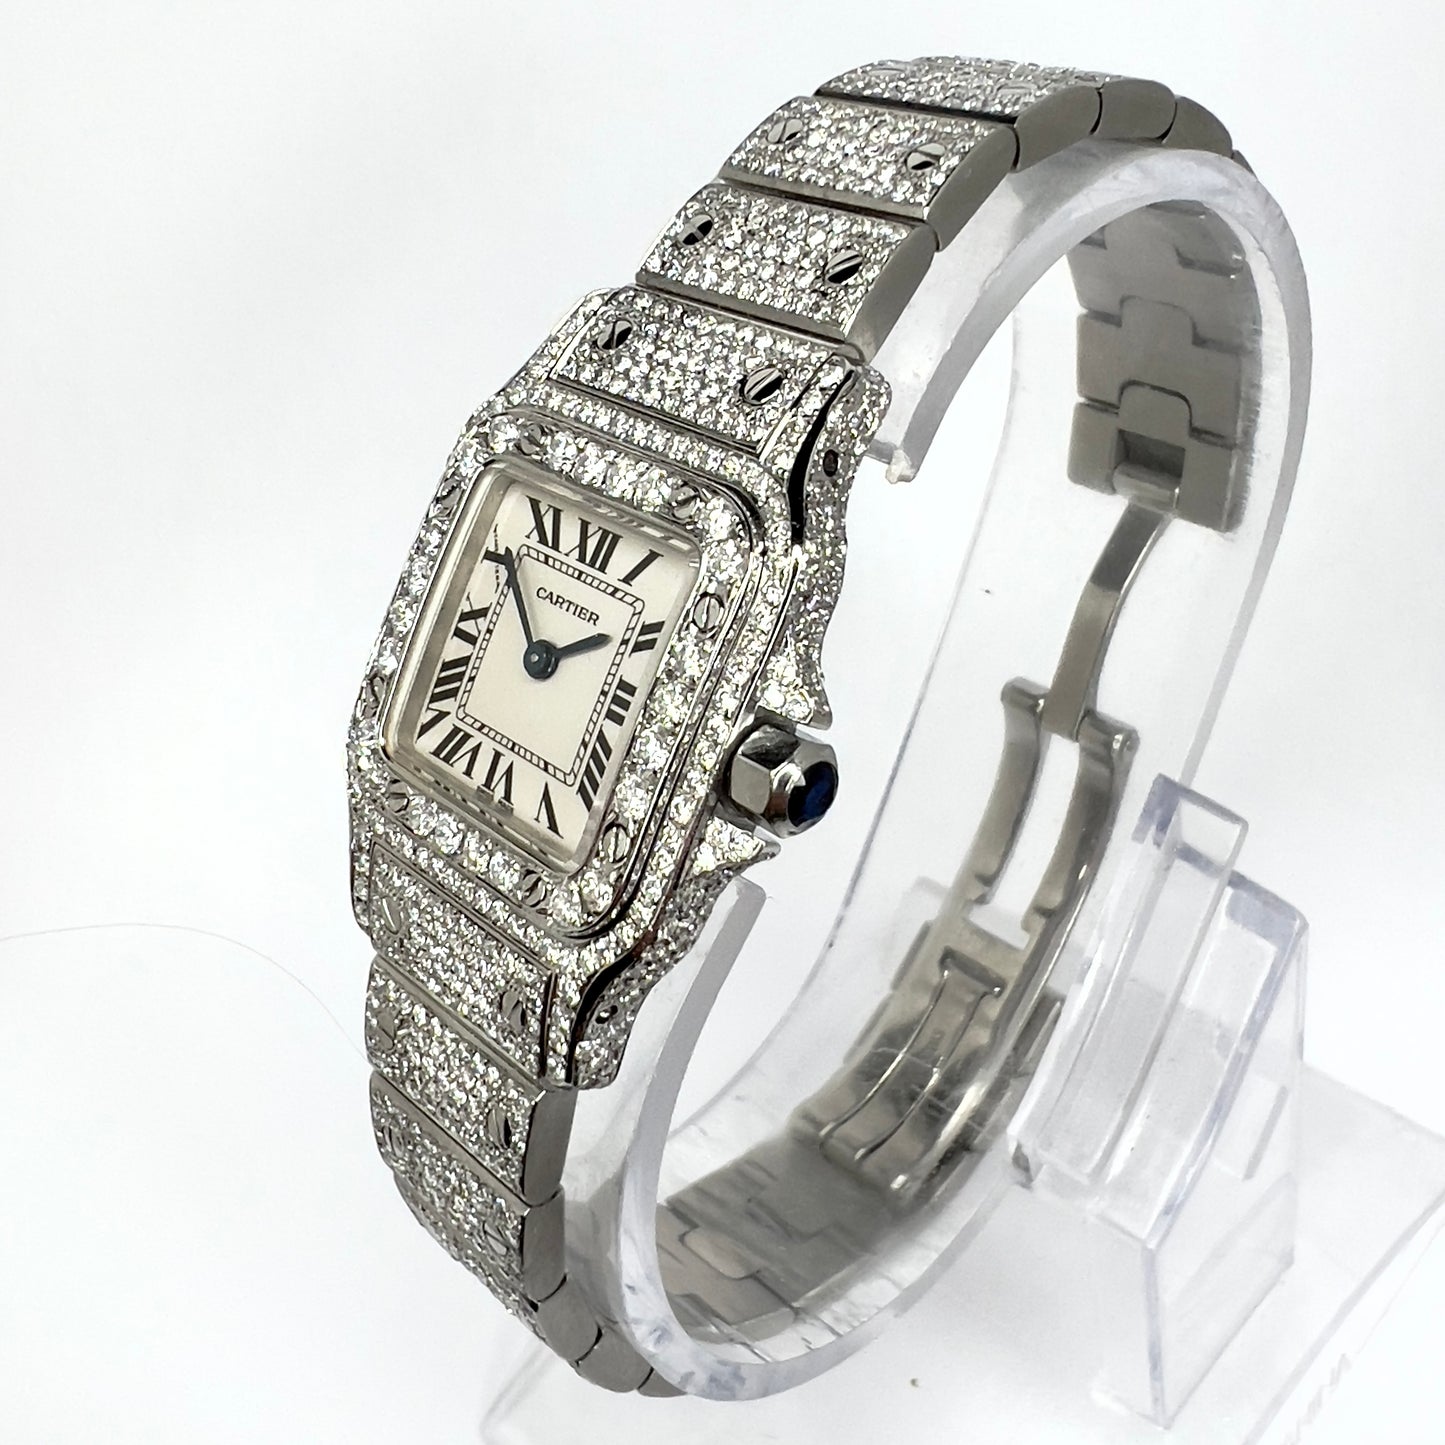 CARTIER SANTOS GALBEE 24mm Quartz Steel 6.36TCW Diamond Watch